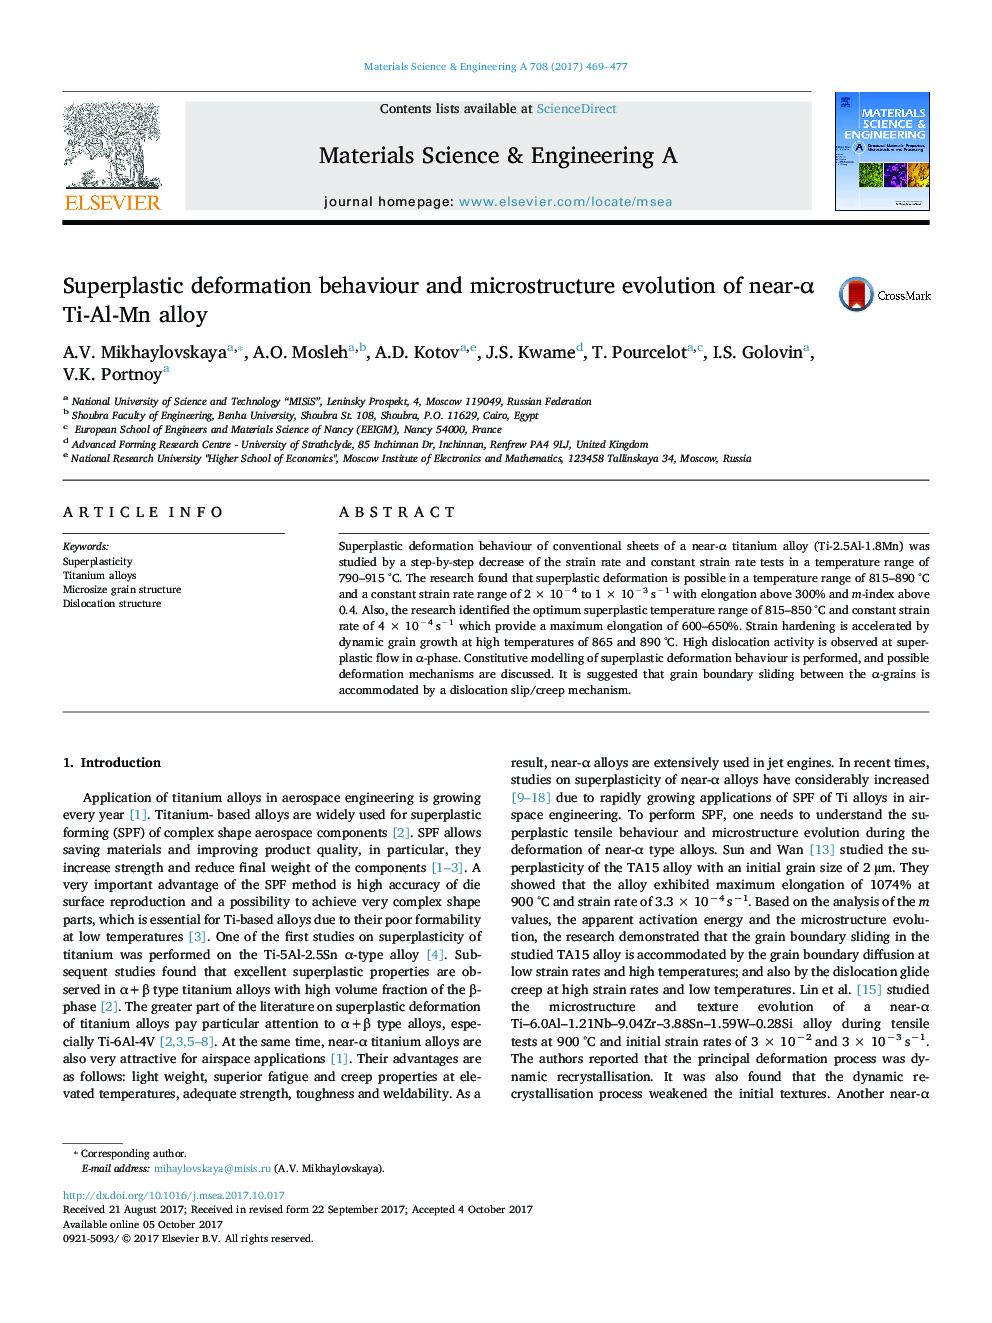 Superplastic deformation behaviour and microstructure evolution of near-Î± Ti-Al-Mn alloy